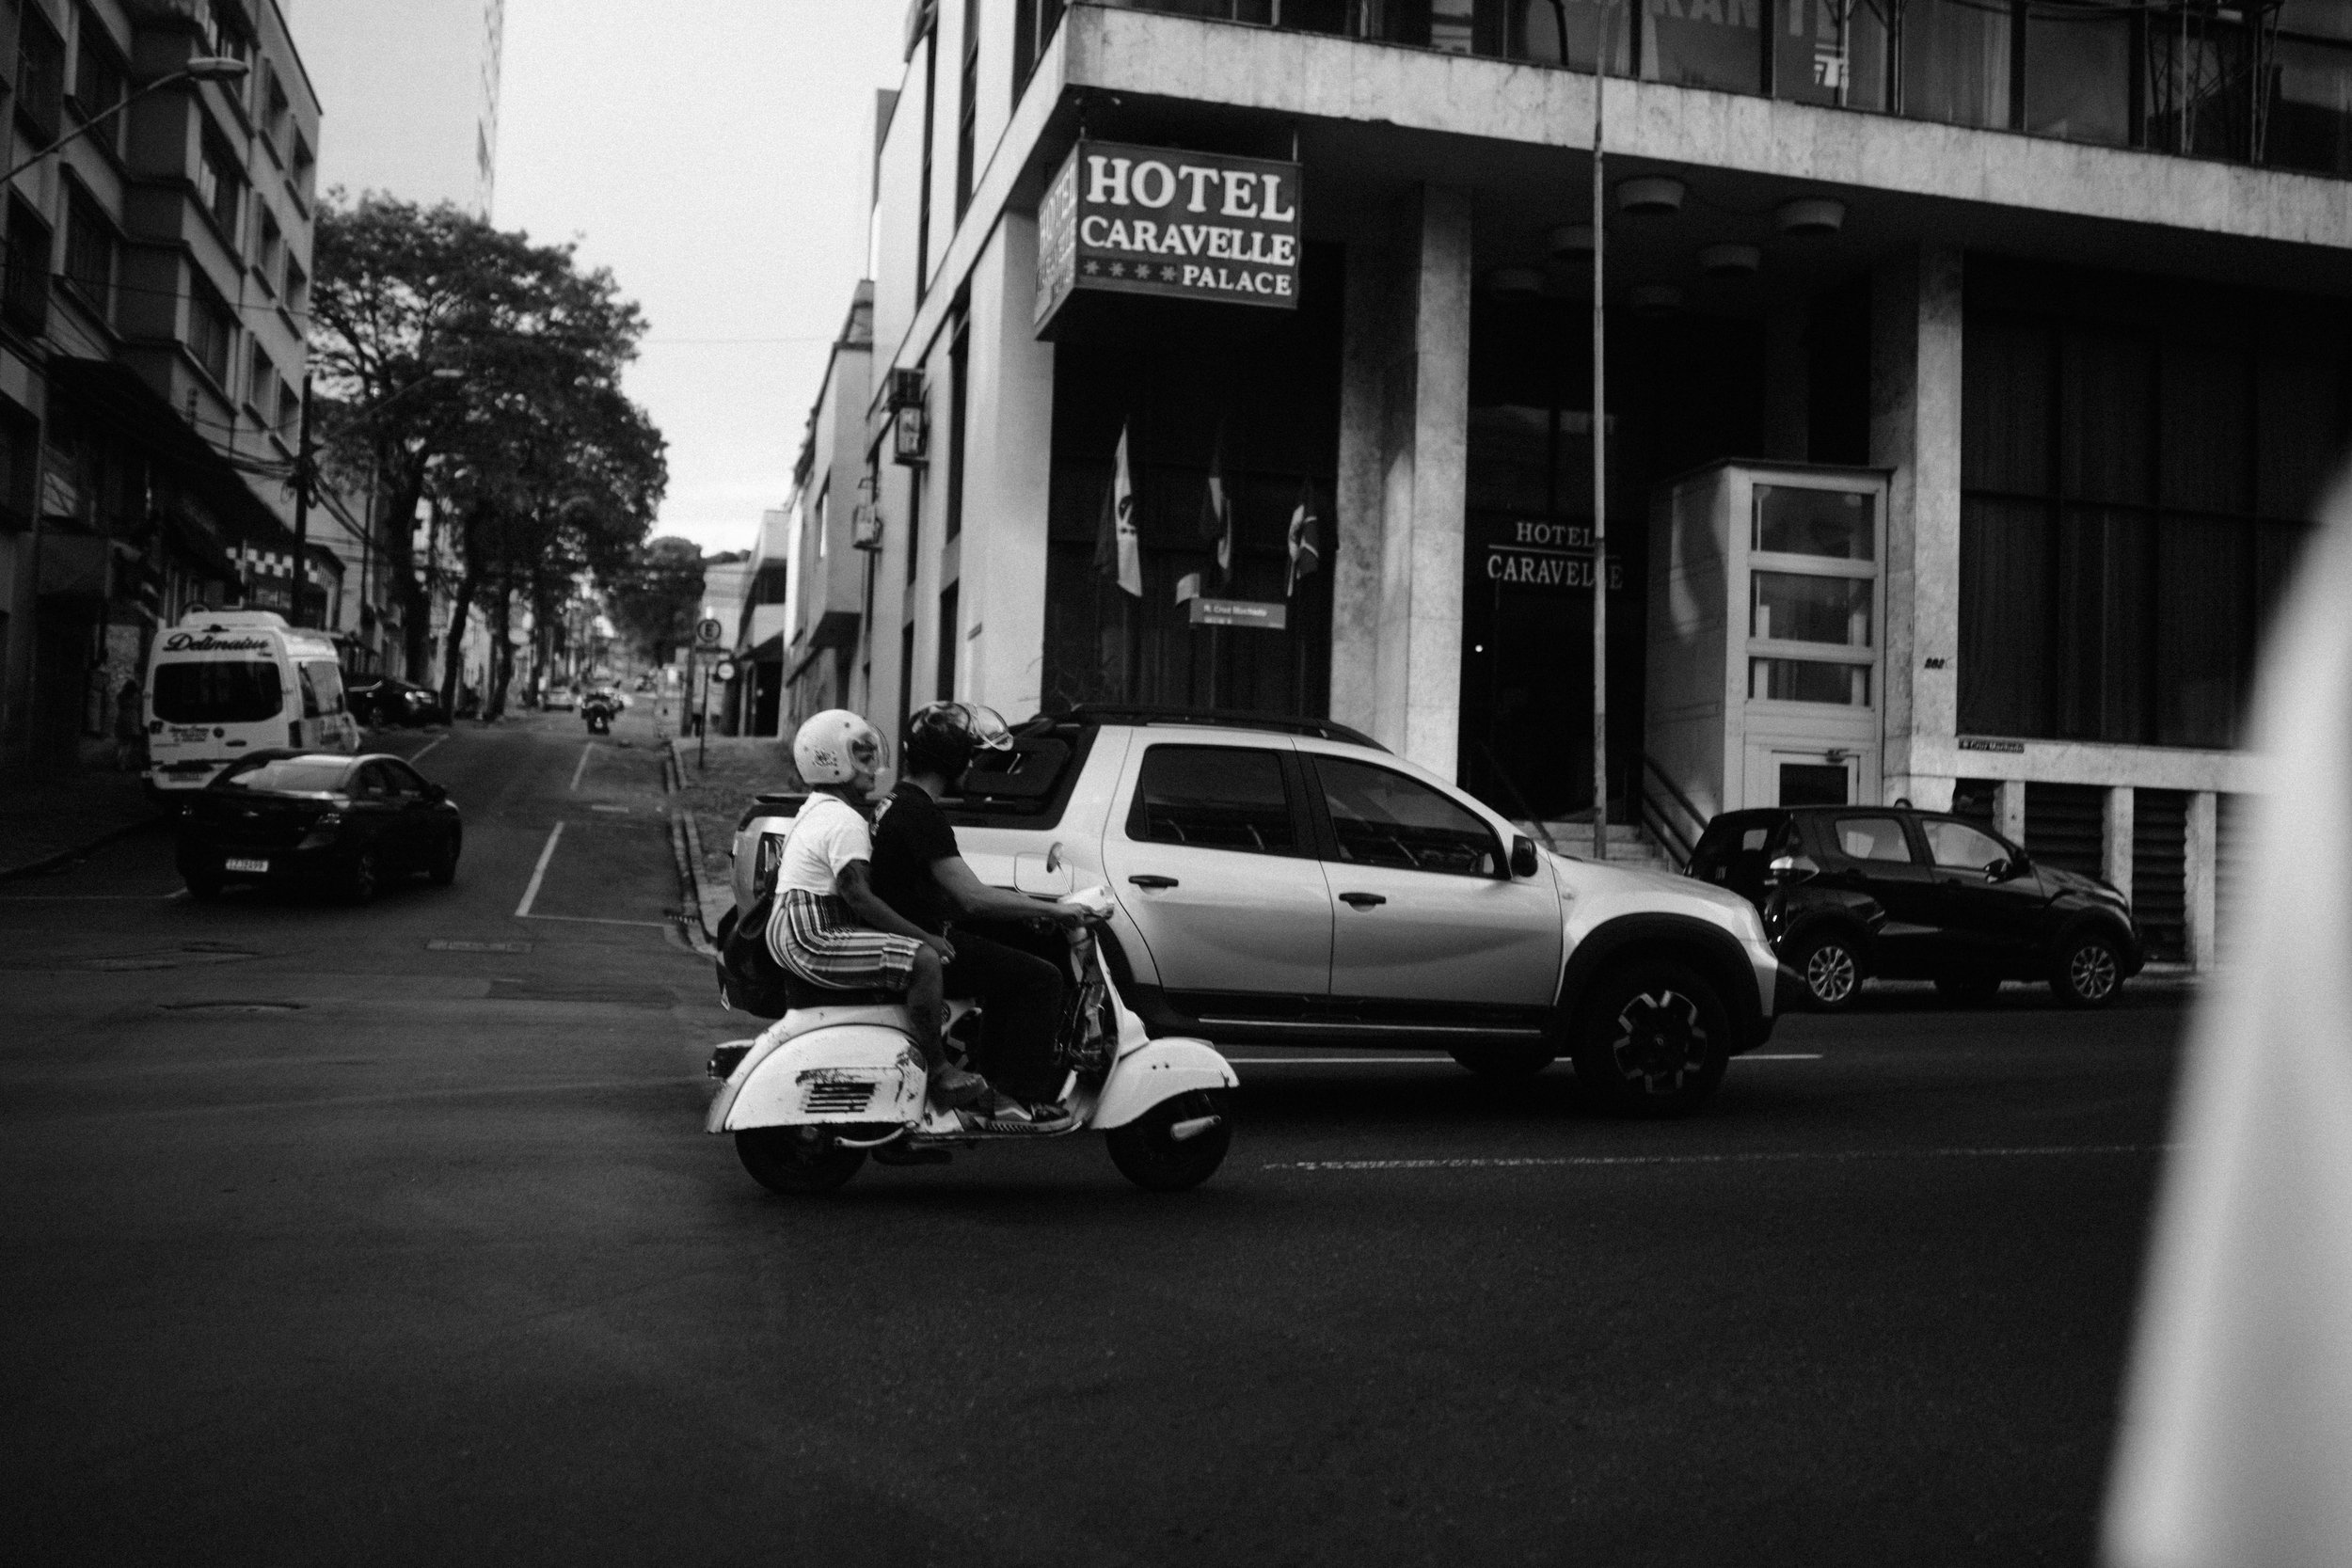 Filtro-Black-Diffusion-KF-Ricardo-Franzen-35mm-sigma-art-fotografia-de-rua-street-photography-brazil-curitiba-5.jpg